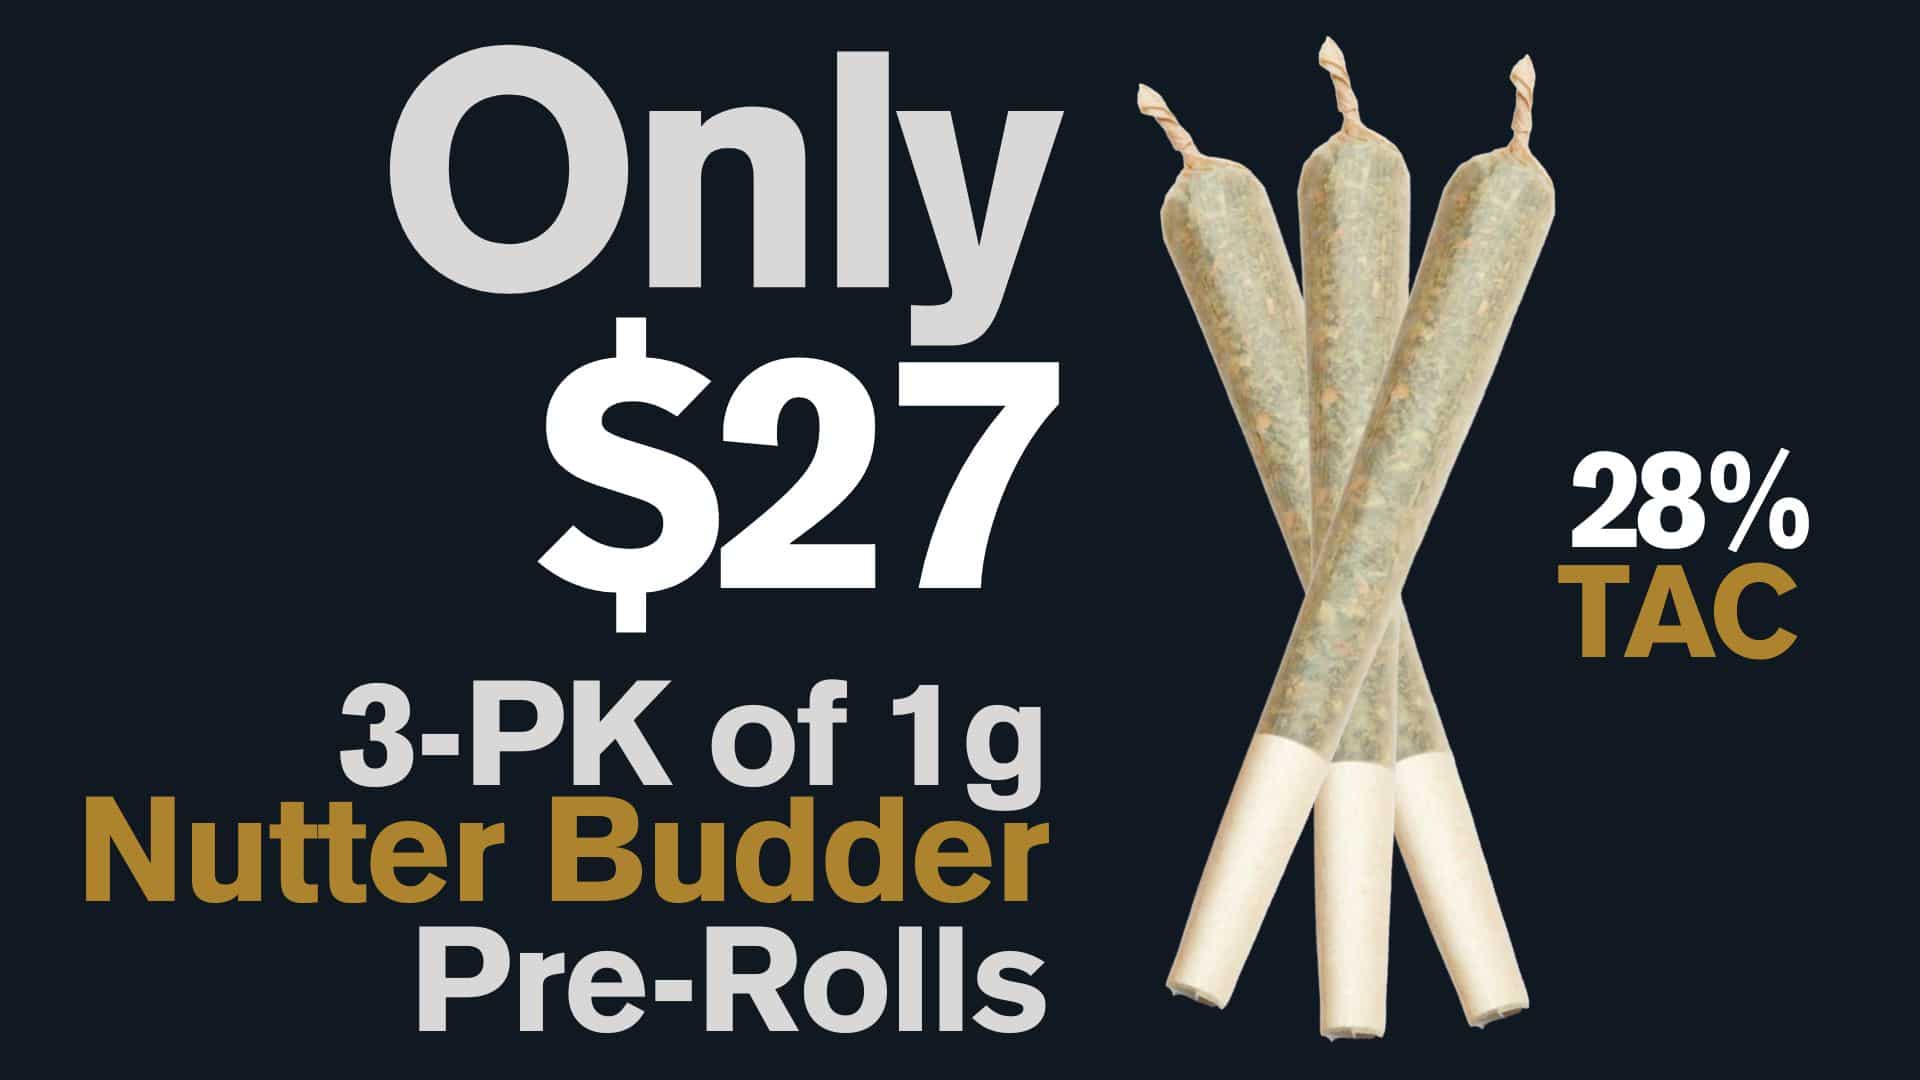 Nutter Budder 3-pk Only $27